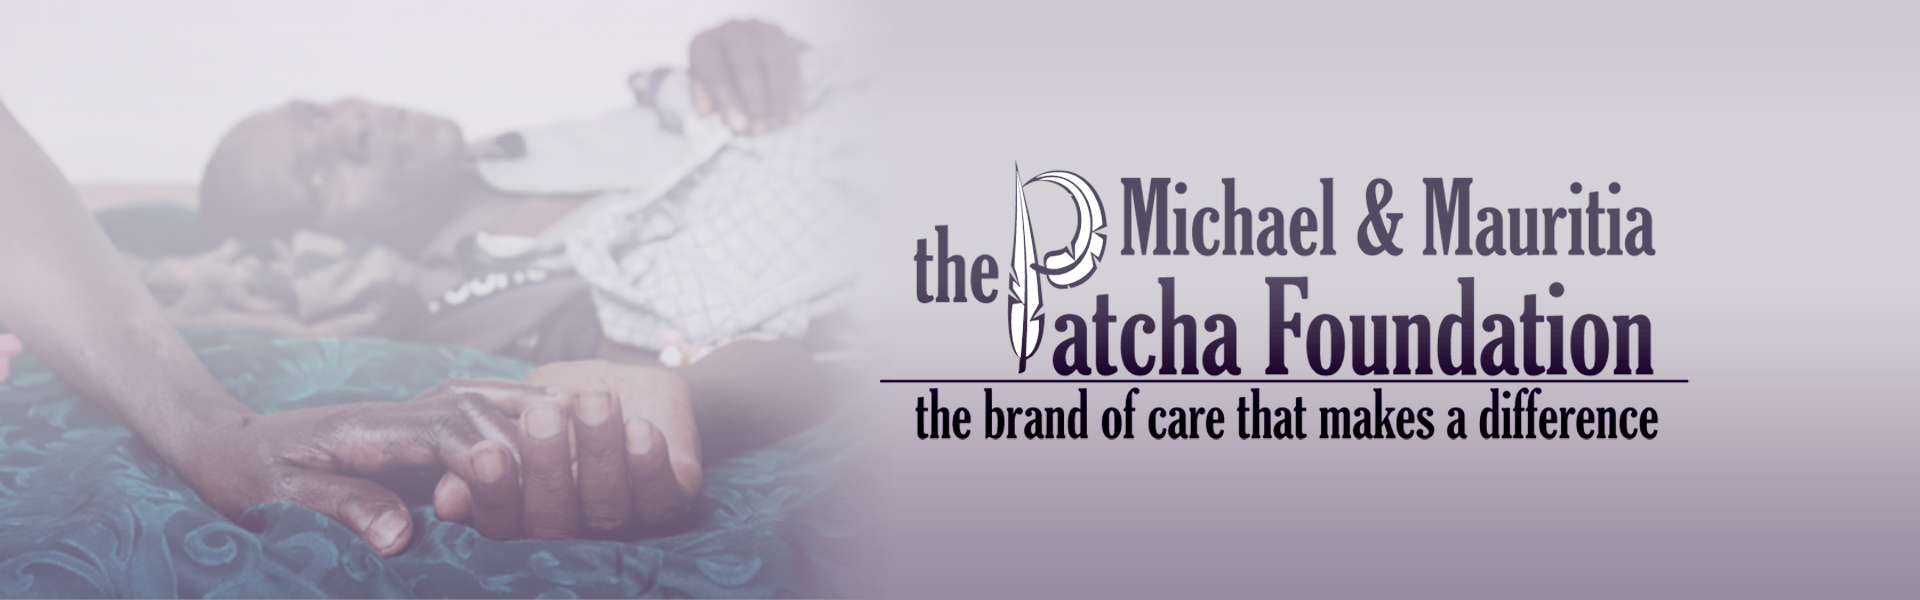 Michael & Mauritia Patcha Foundation